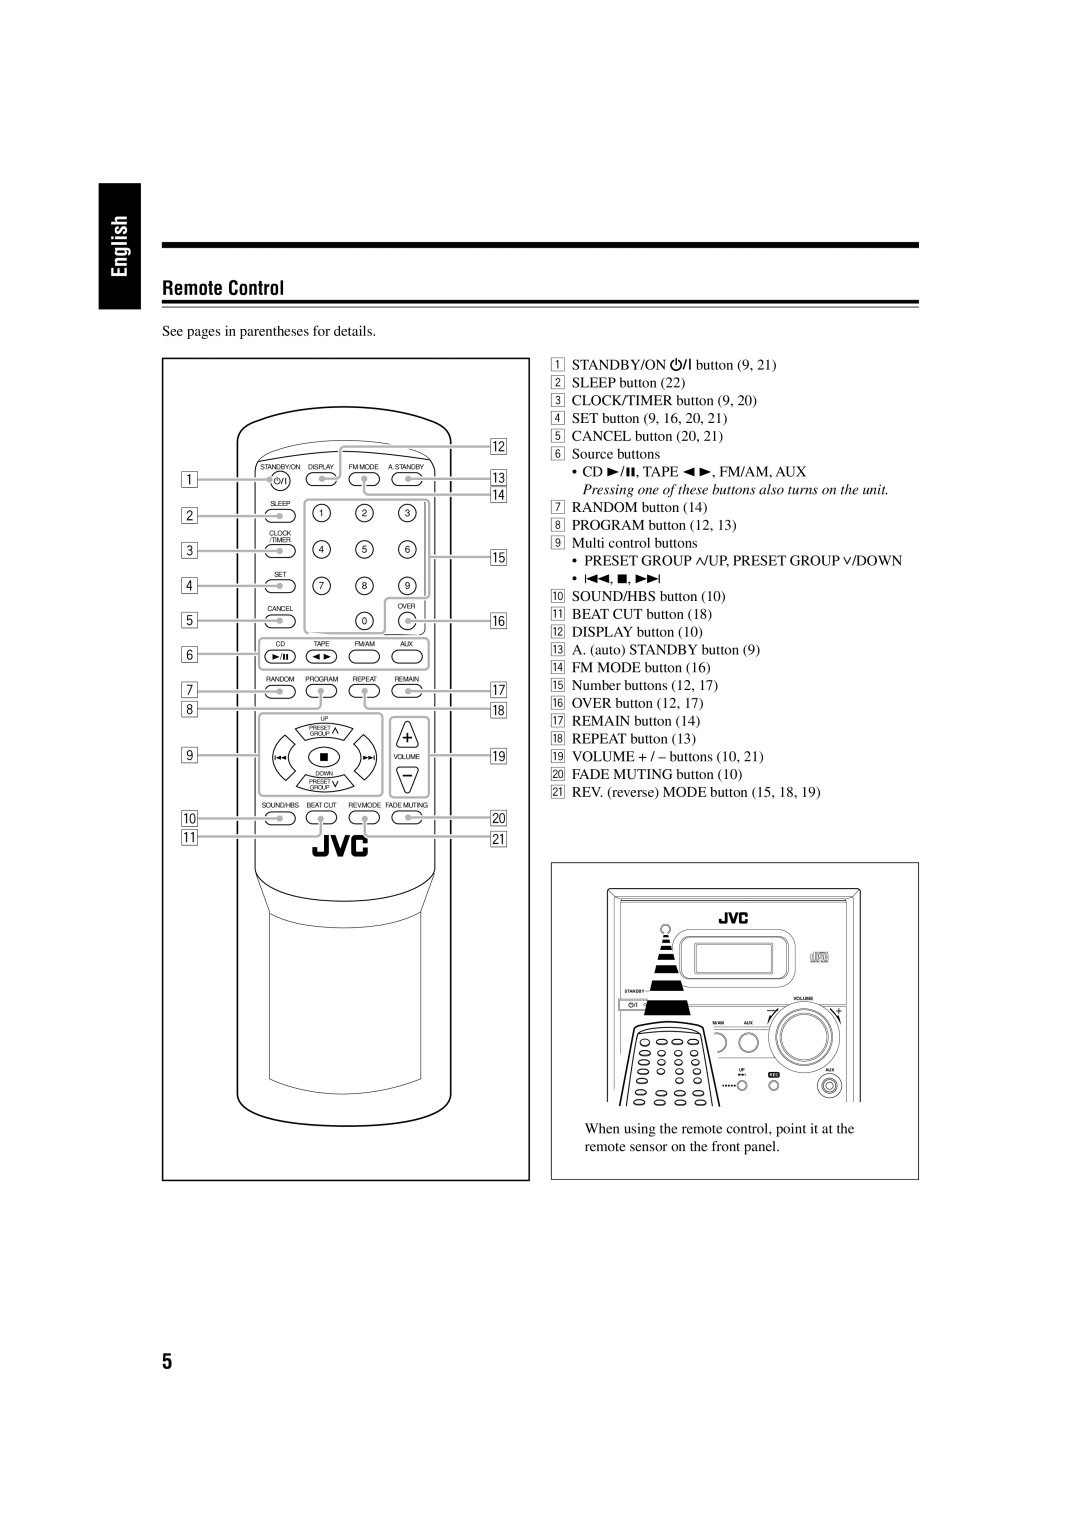 JVC UX-H300 manual English, Remote Control 